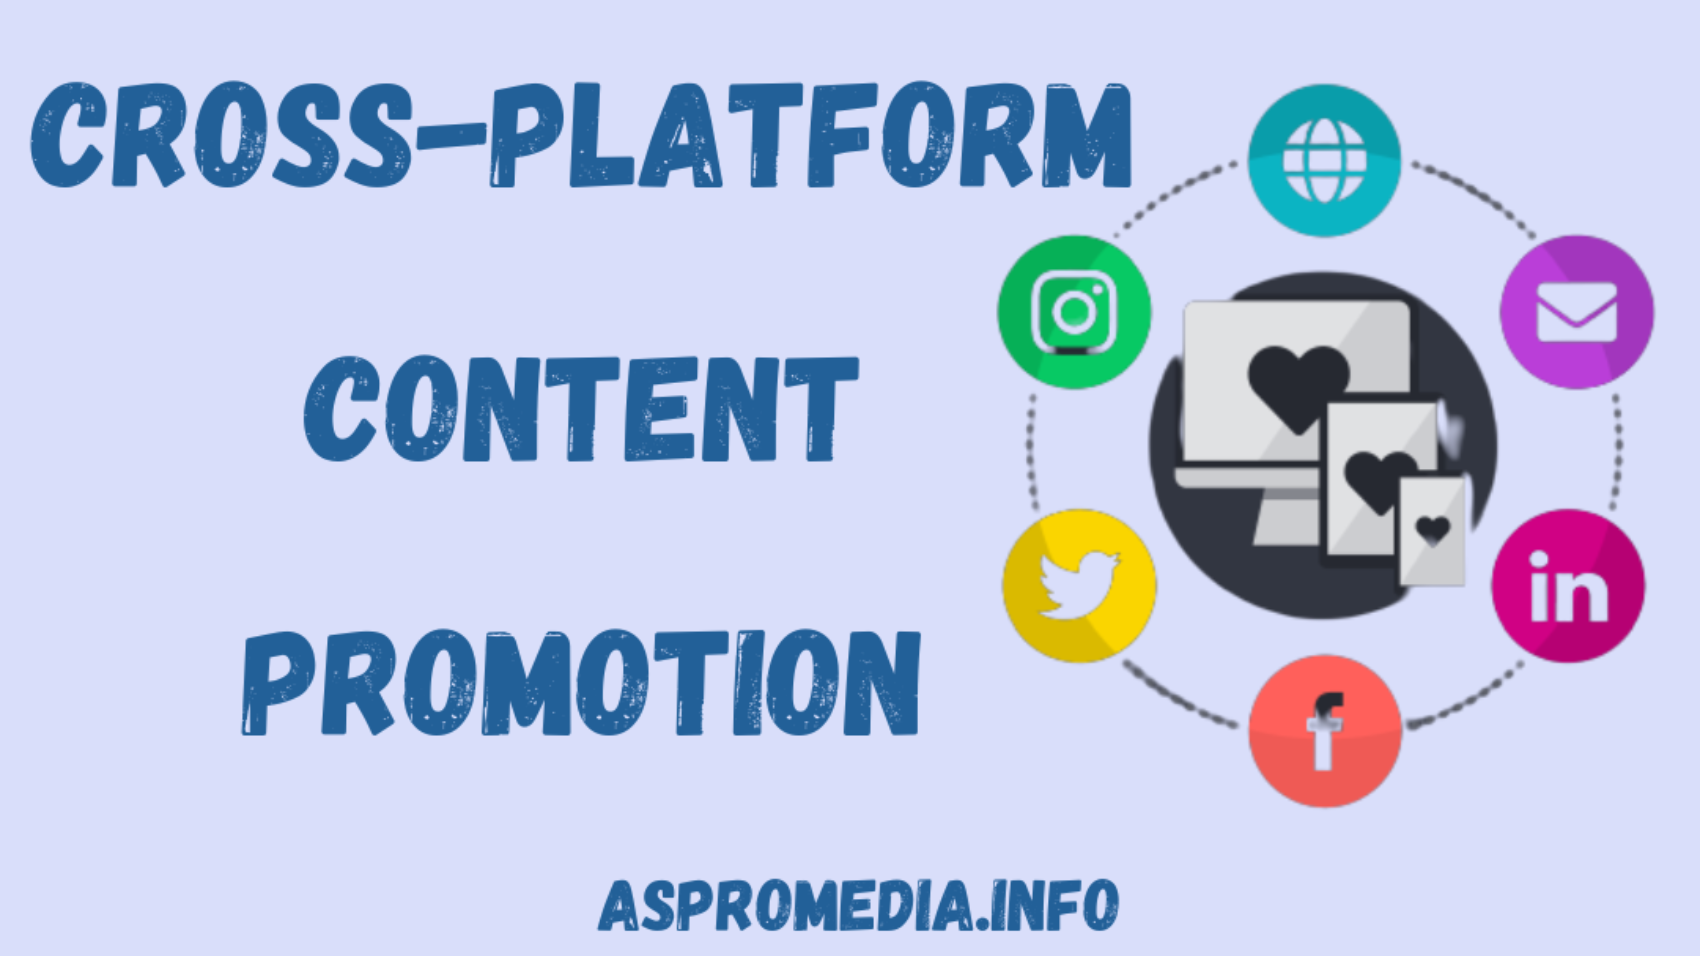 Cross-Platform Content Promotion